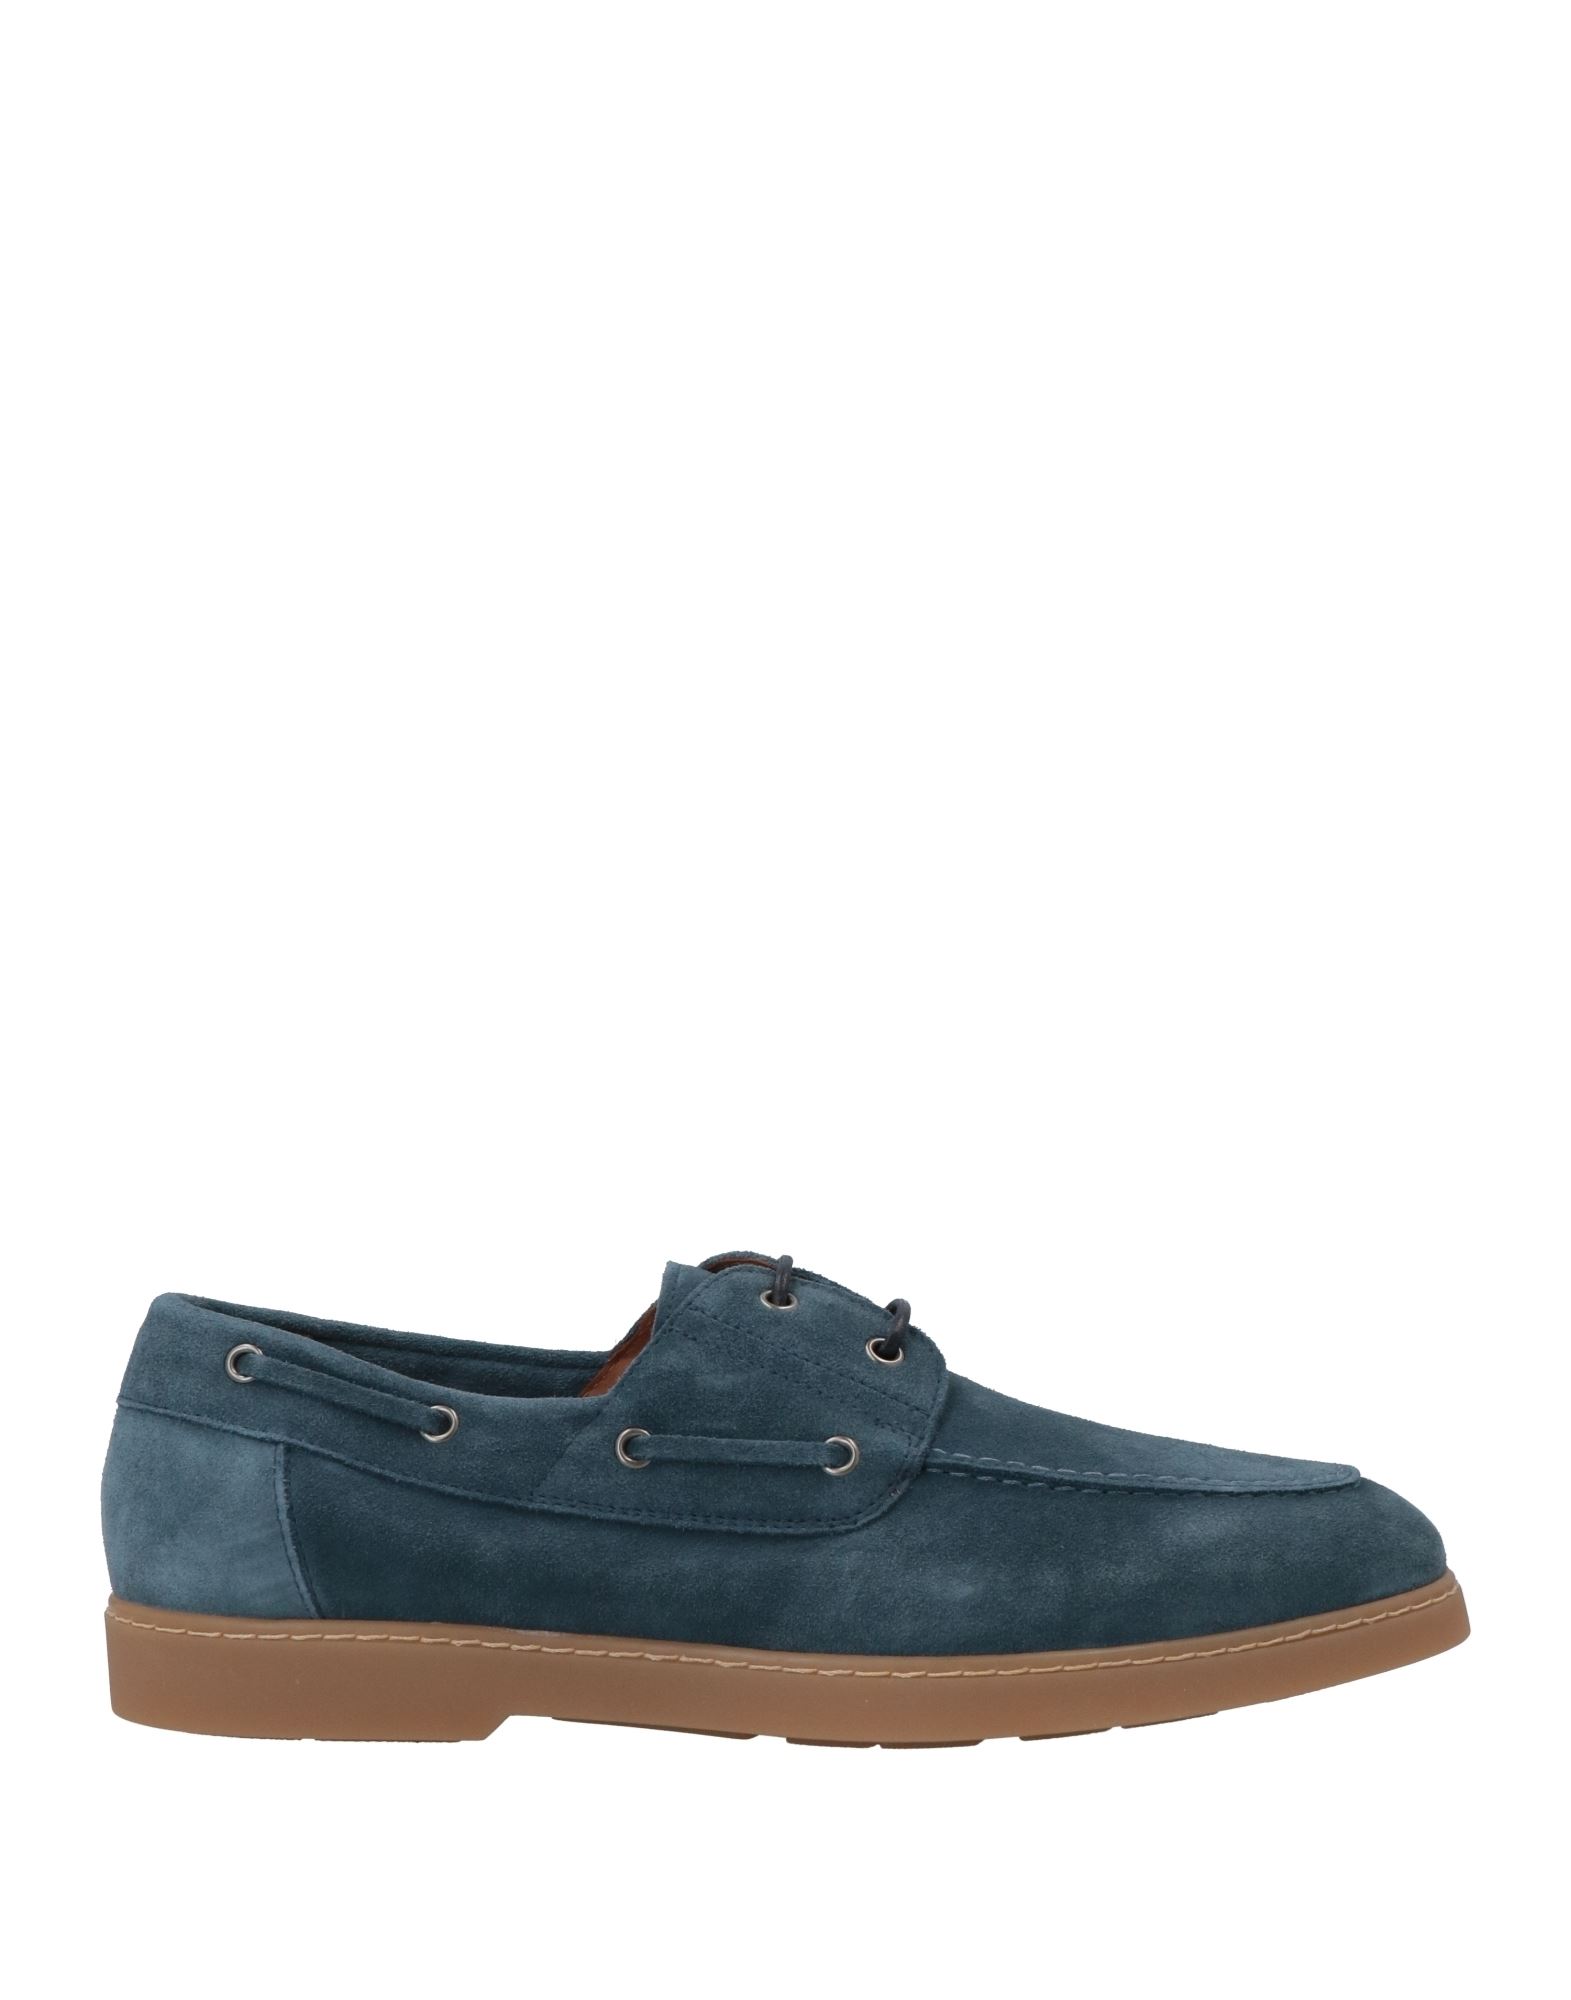 Doucal's Man Loafers Slate Blue Size 11 Calfskin